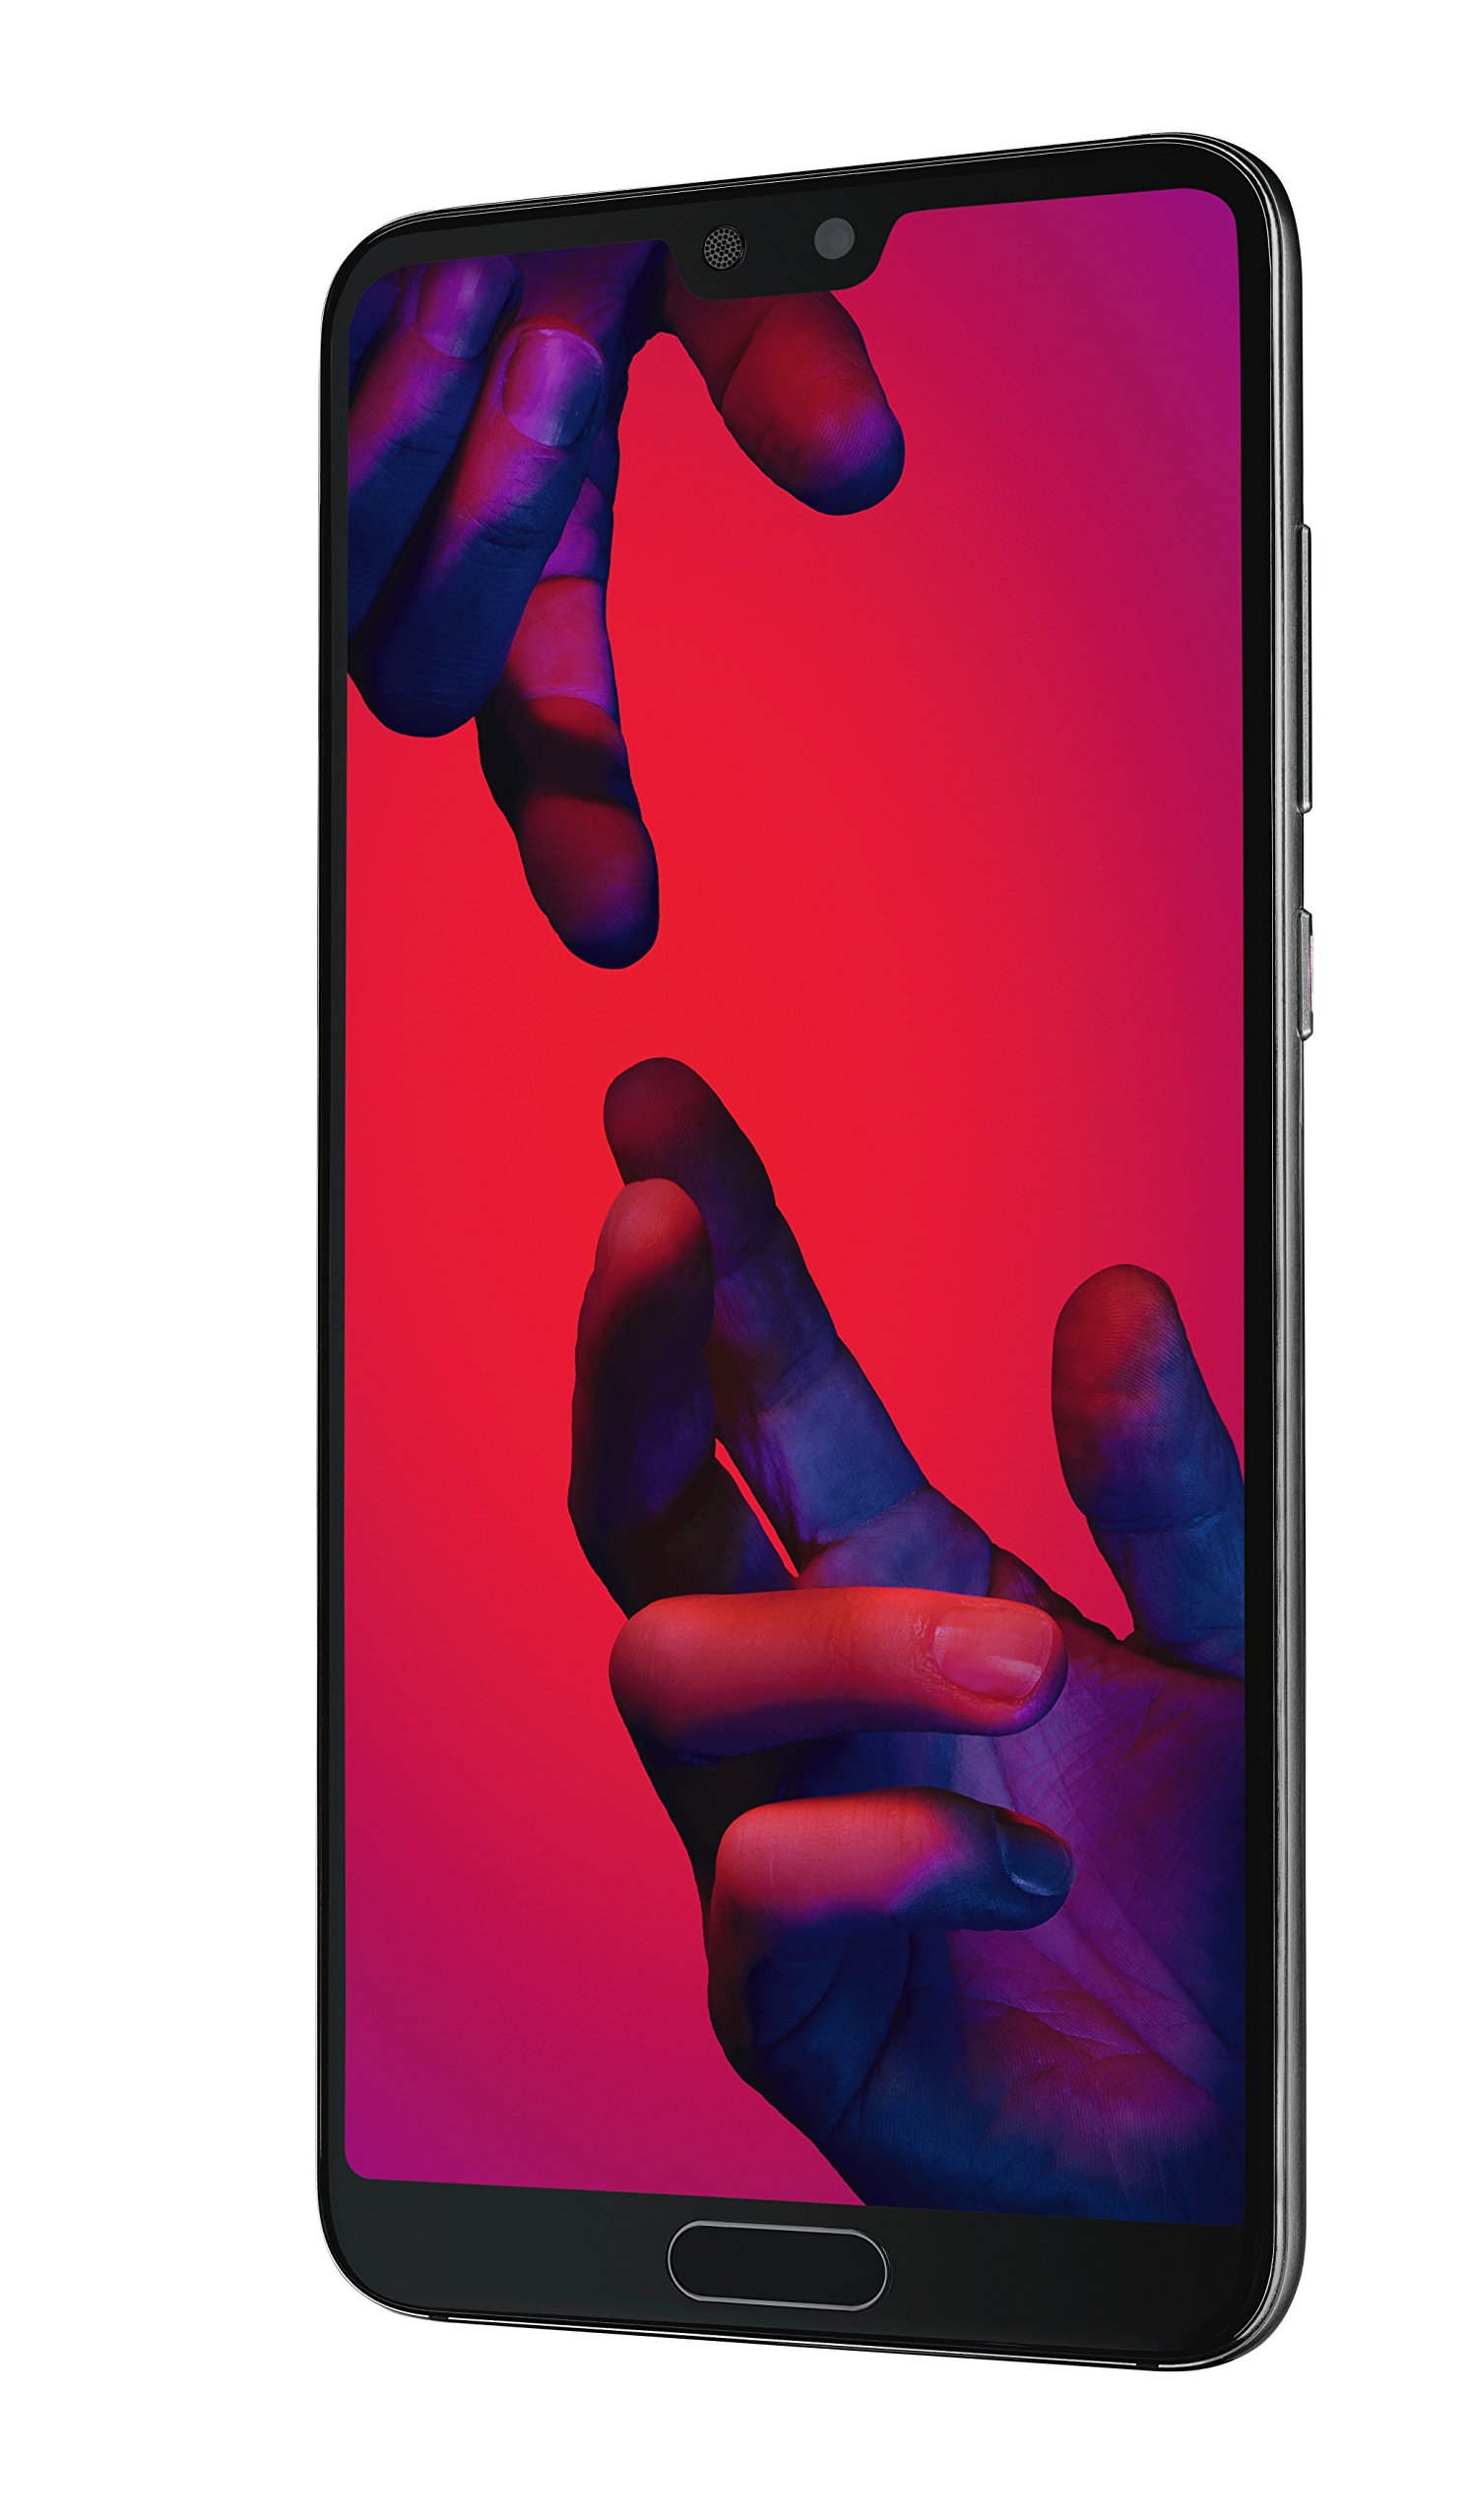 Huawei P20 Pro 128GB Dual-SIM (GSM Only, No CDMA) Factory Unlocked 4G/LTE Smartphone (Black) - International Version